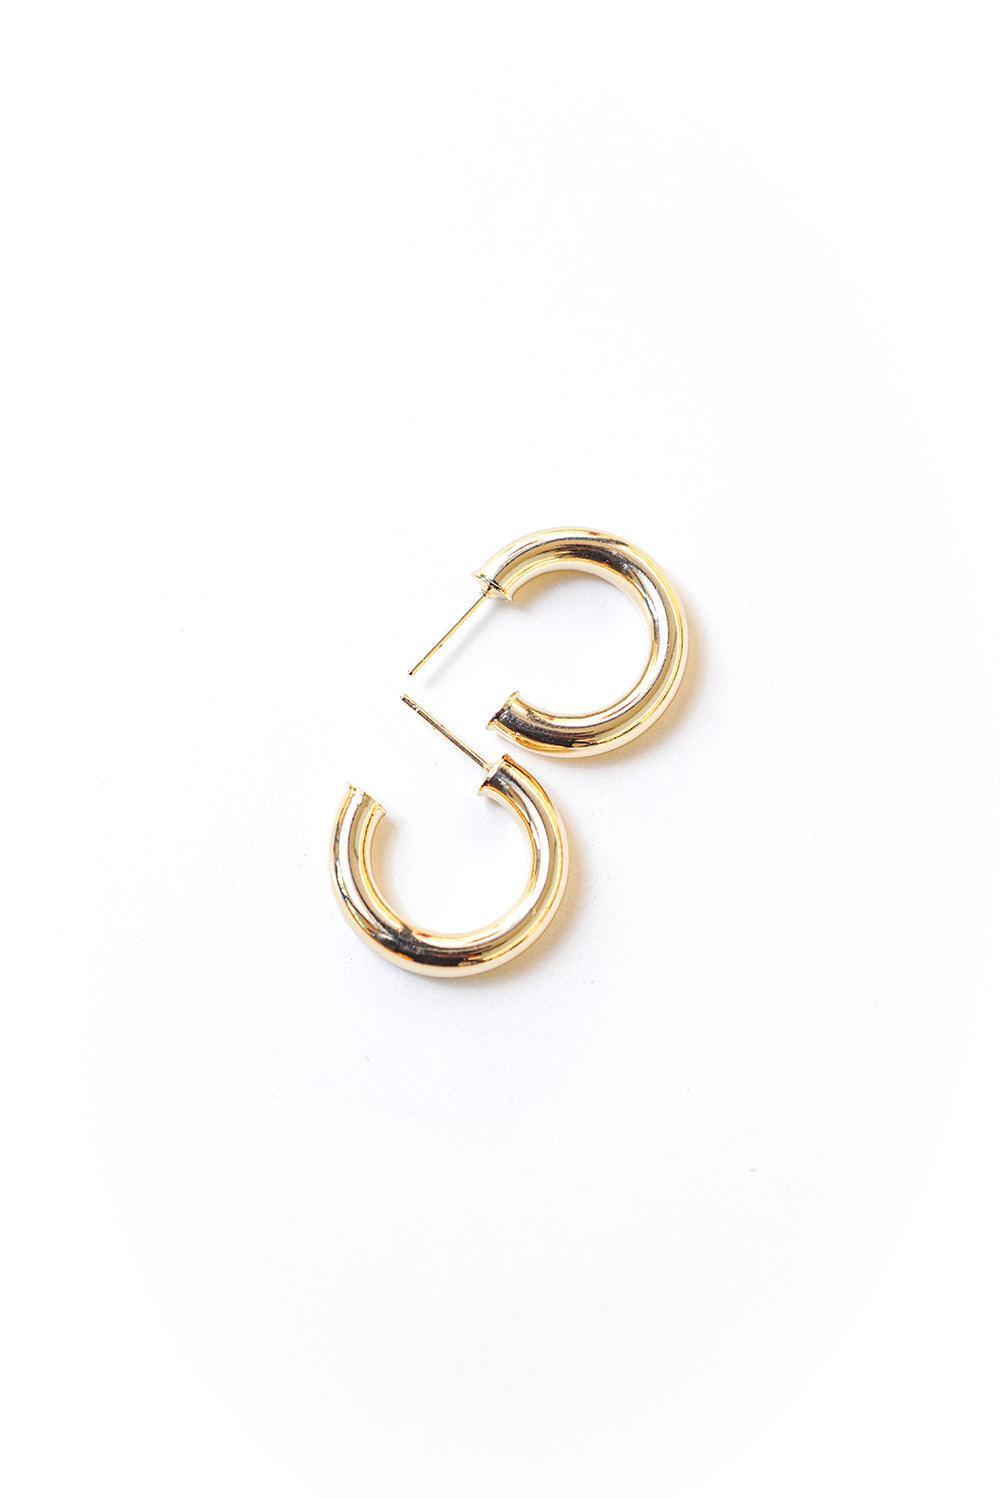 Gold tone classic hoop earrings with secure post fastening. 25mm in diameter